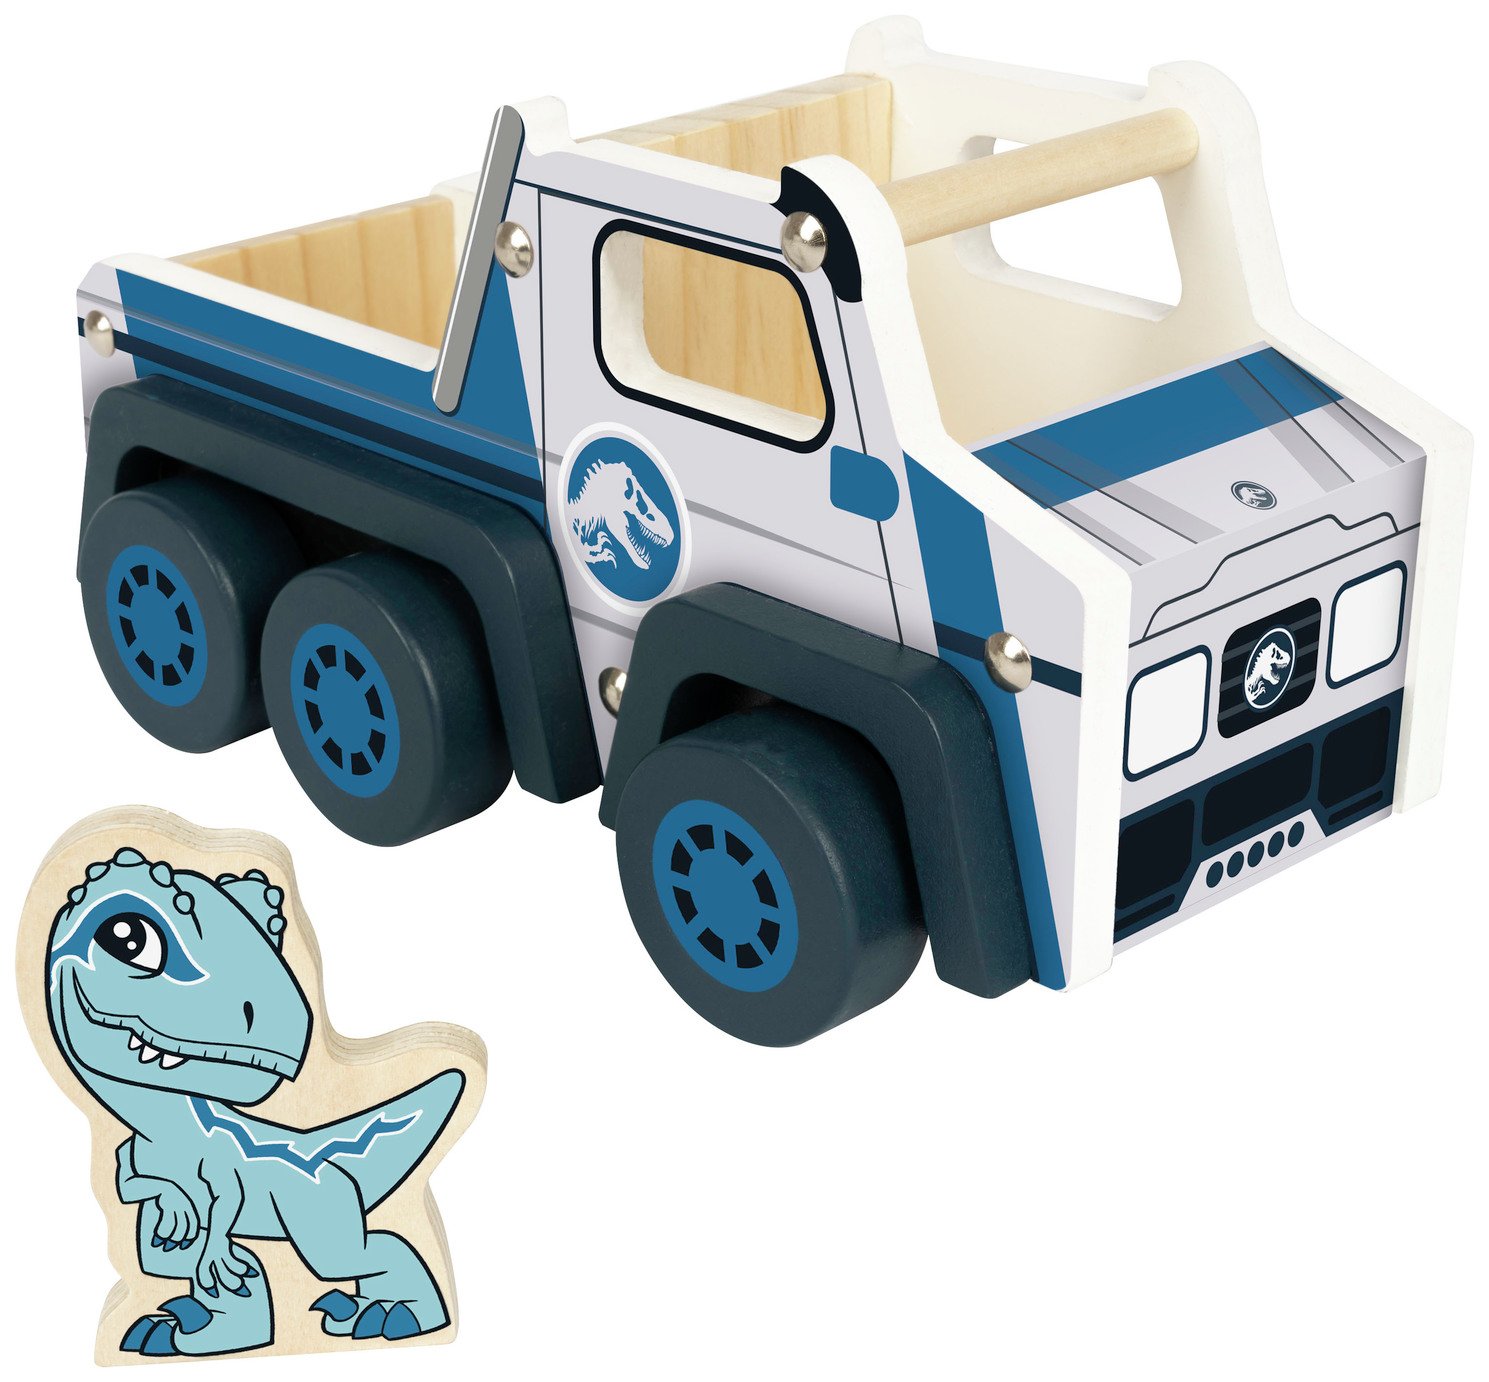 Jurrasic World Wooden 6x6 Vehicle & Blue The Raptor Figure